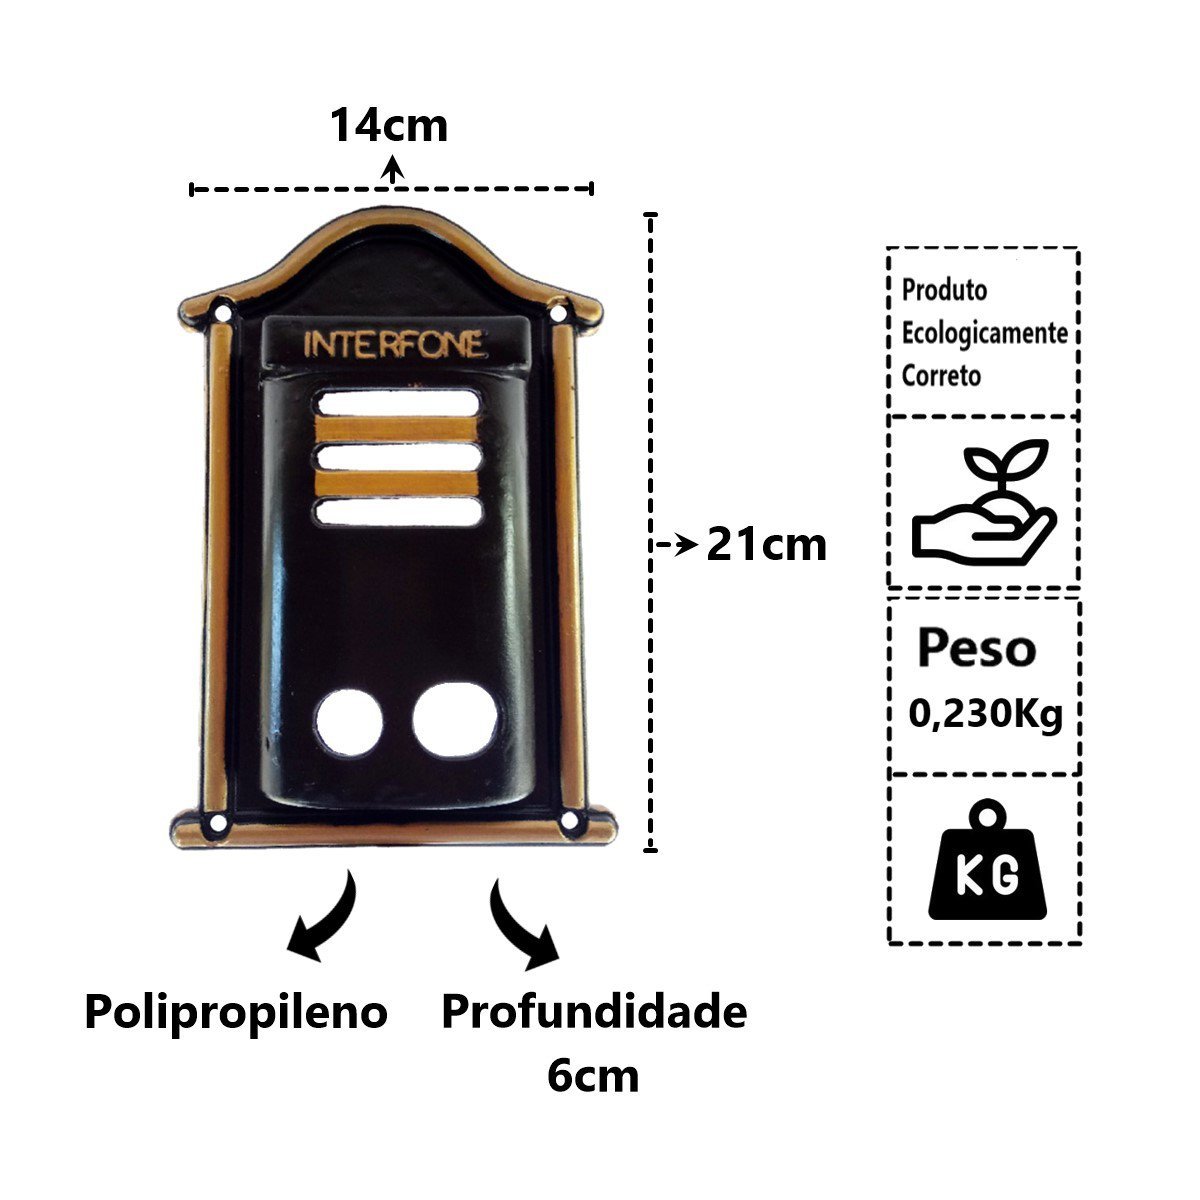 Protetor Interfone Caixa de Polipropileno Ouro 21x14x6cm Brassol - 2